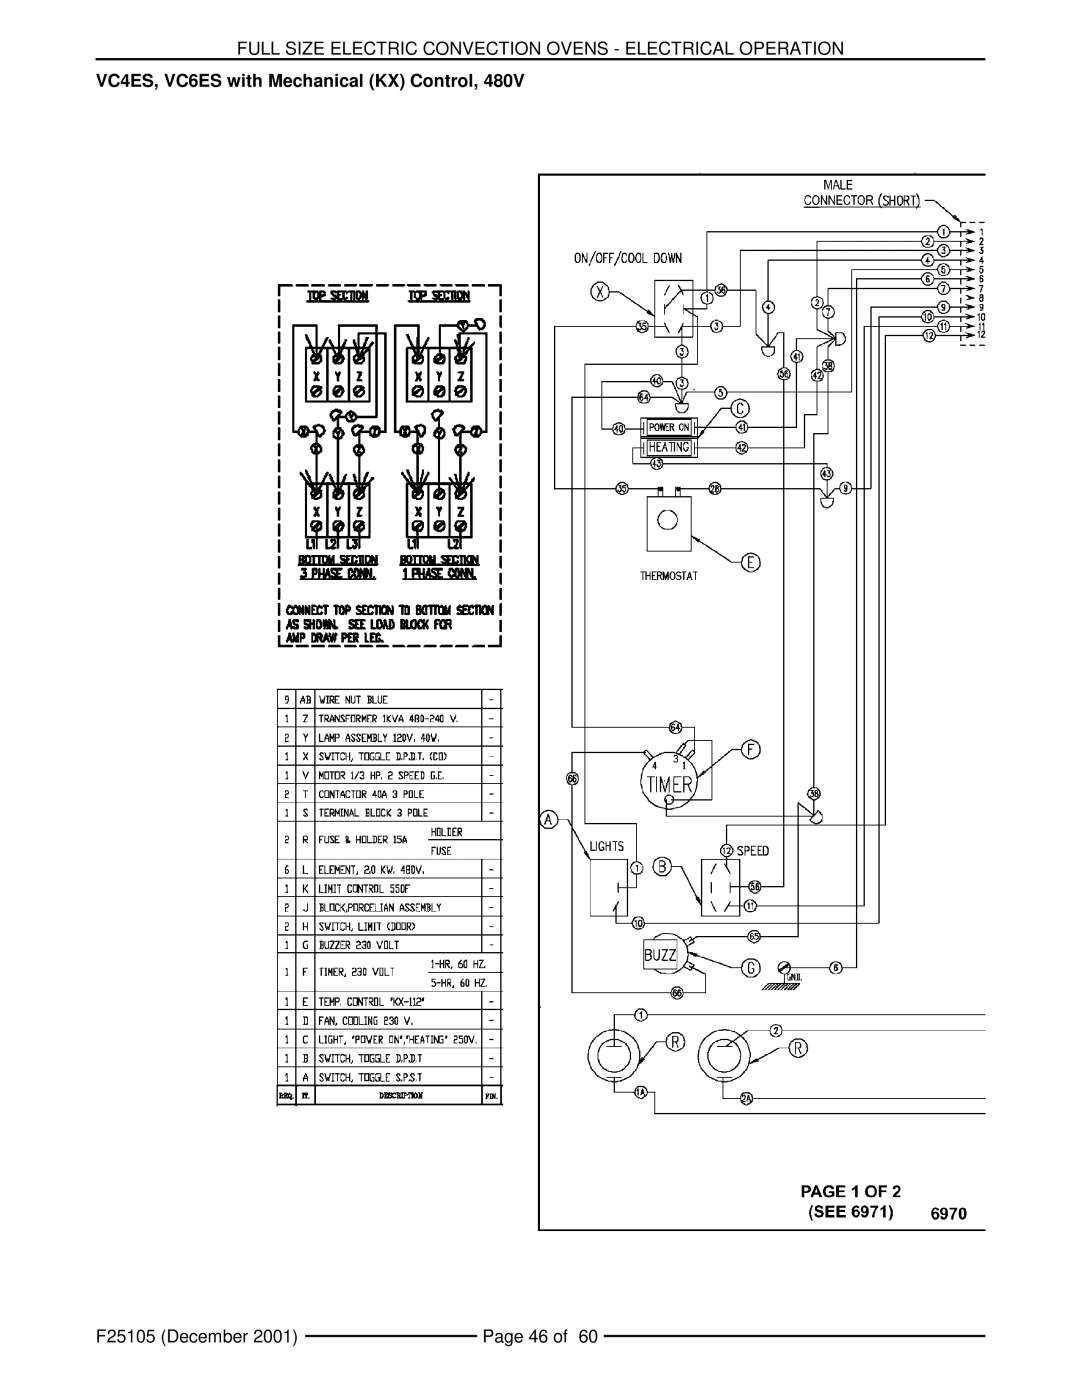 Vulcan-Hart VC4ED, VCIEC, VC6ED, VC6EC service manual VC4ES, VC6ES with Mechanical KX Control, F25105 December, Page 46 of 